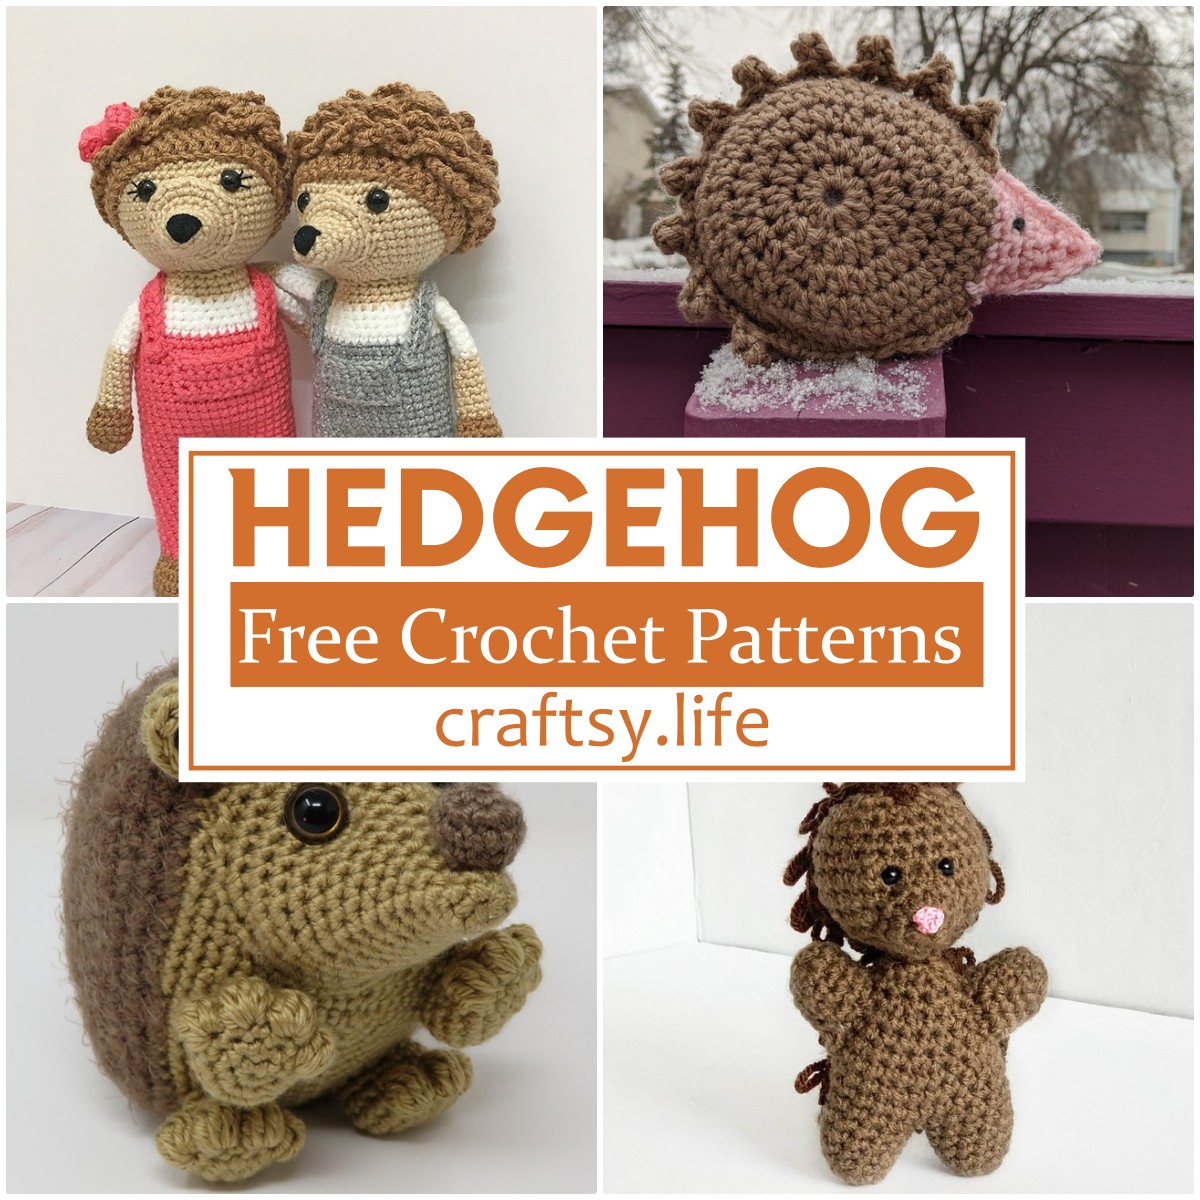 Free Crochet Hedgehog Patterns